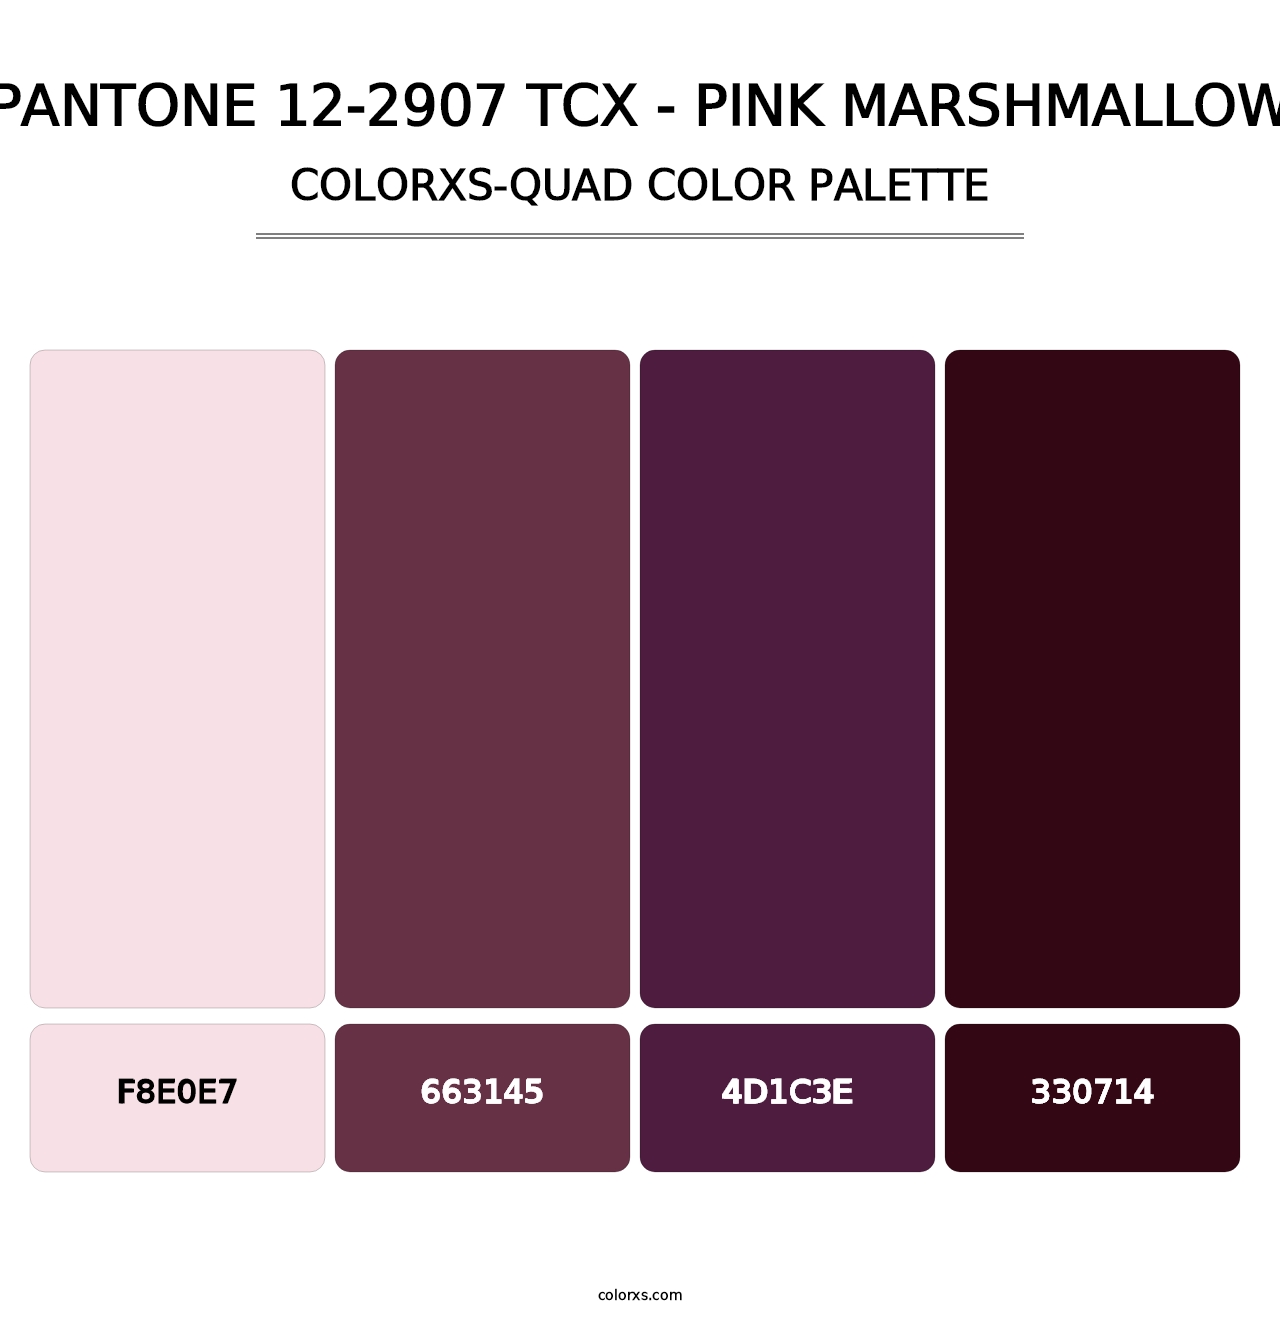 PANTONE 12-2907 TCX - Pink Marshmallow - Colorxs Quad Palette